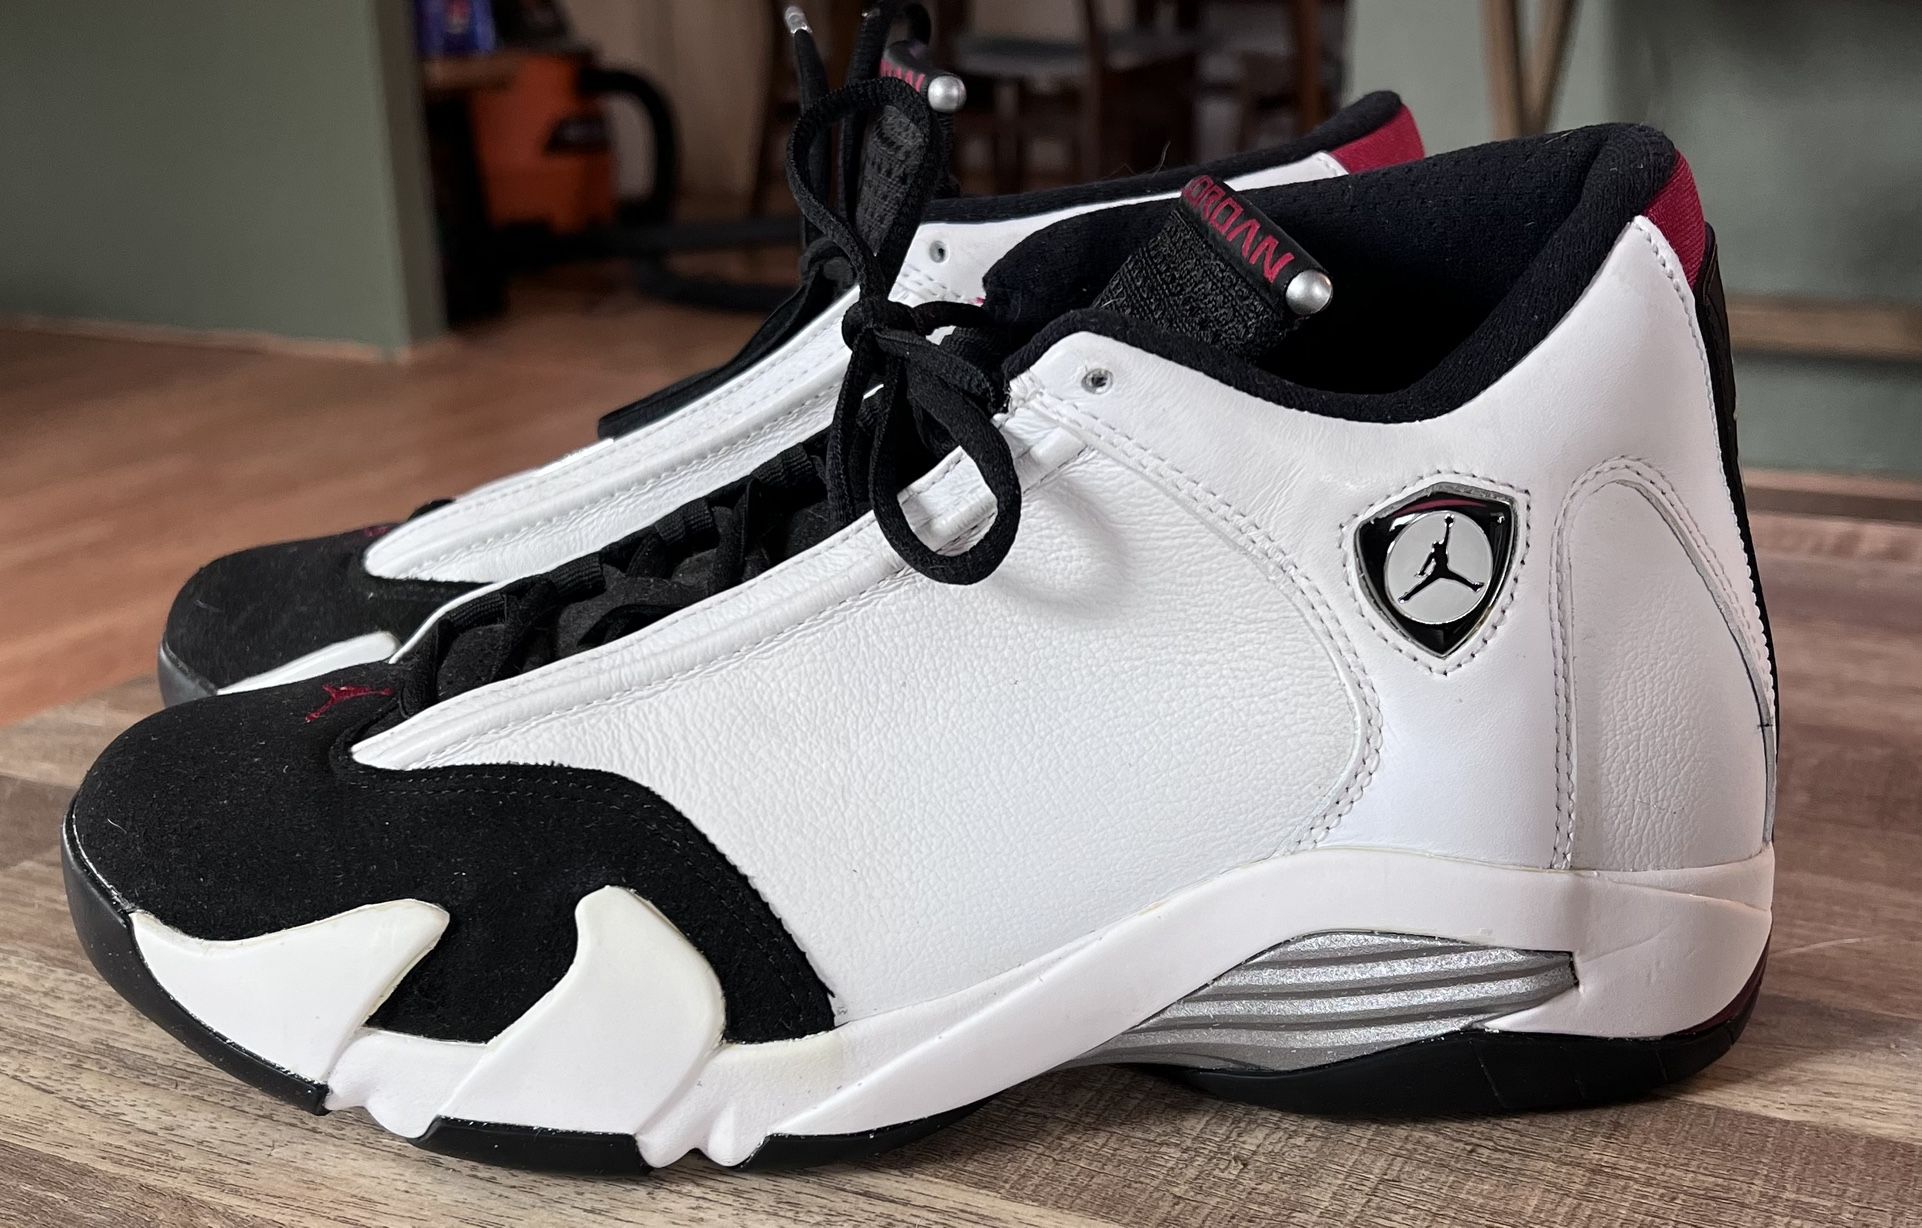 Jordan 14 Retro Black Toe (2014) Mens Size 9.5 In Great Condition.